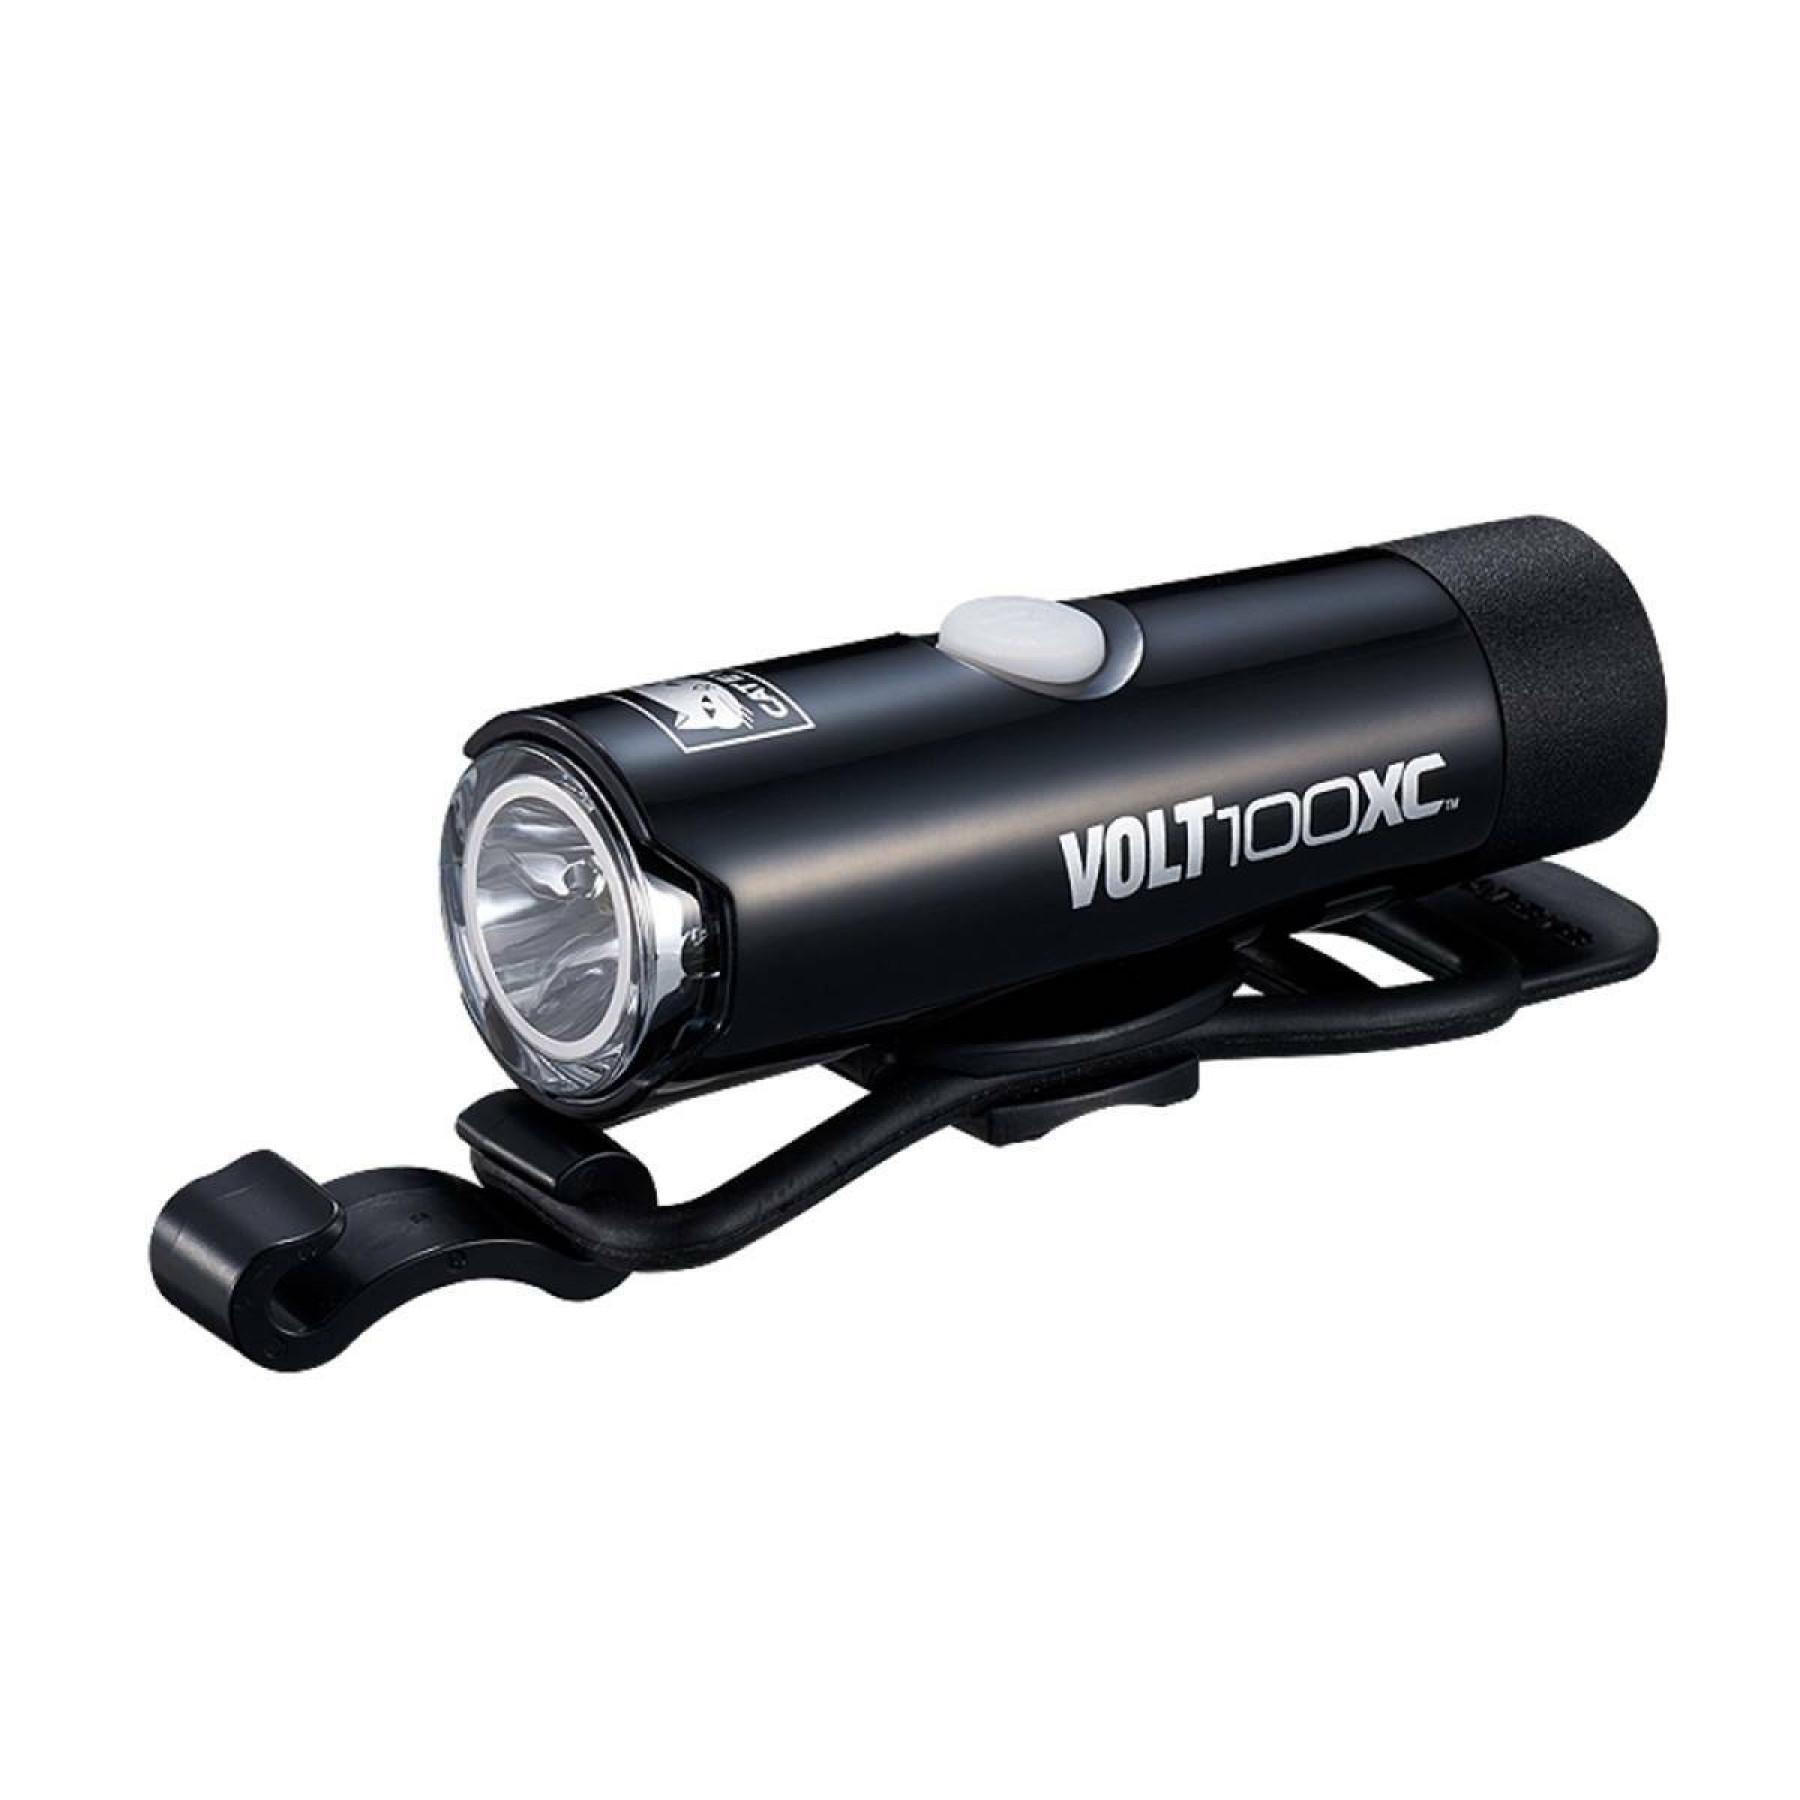 iluminação Cateye Volt 100 XC rechargeable/Orb pile